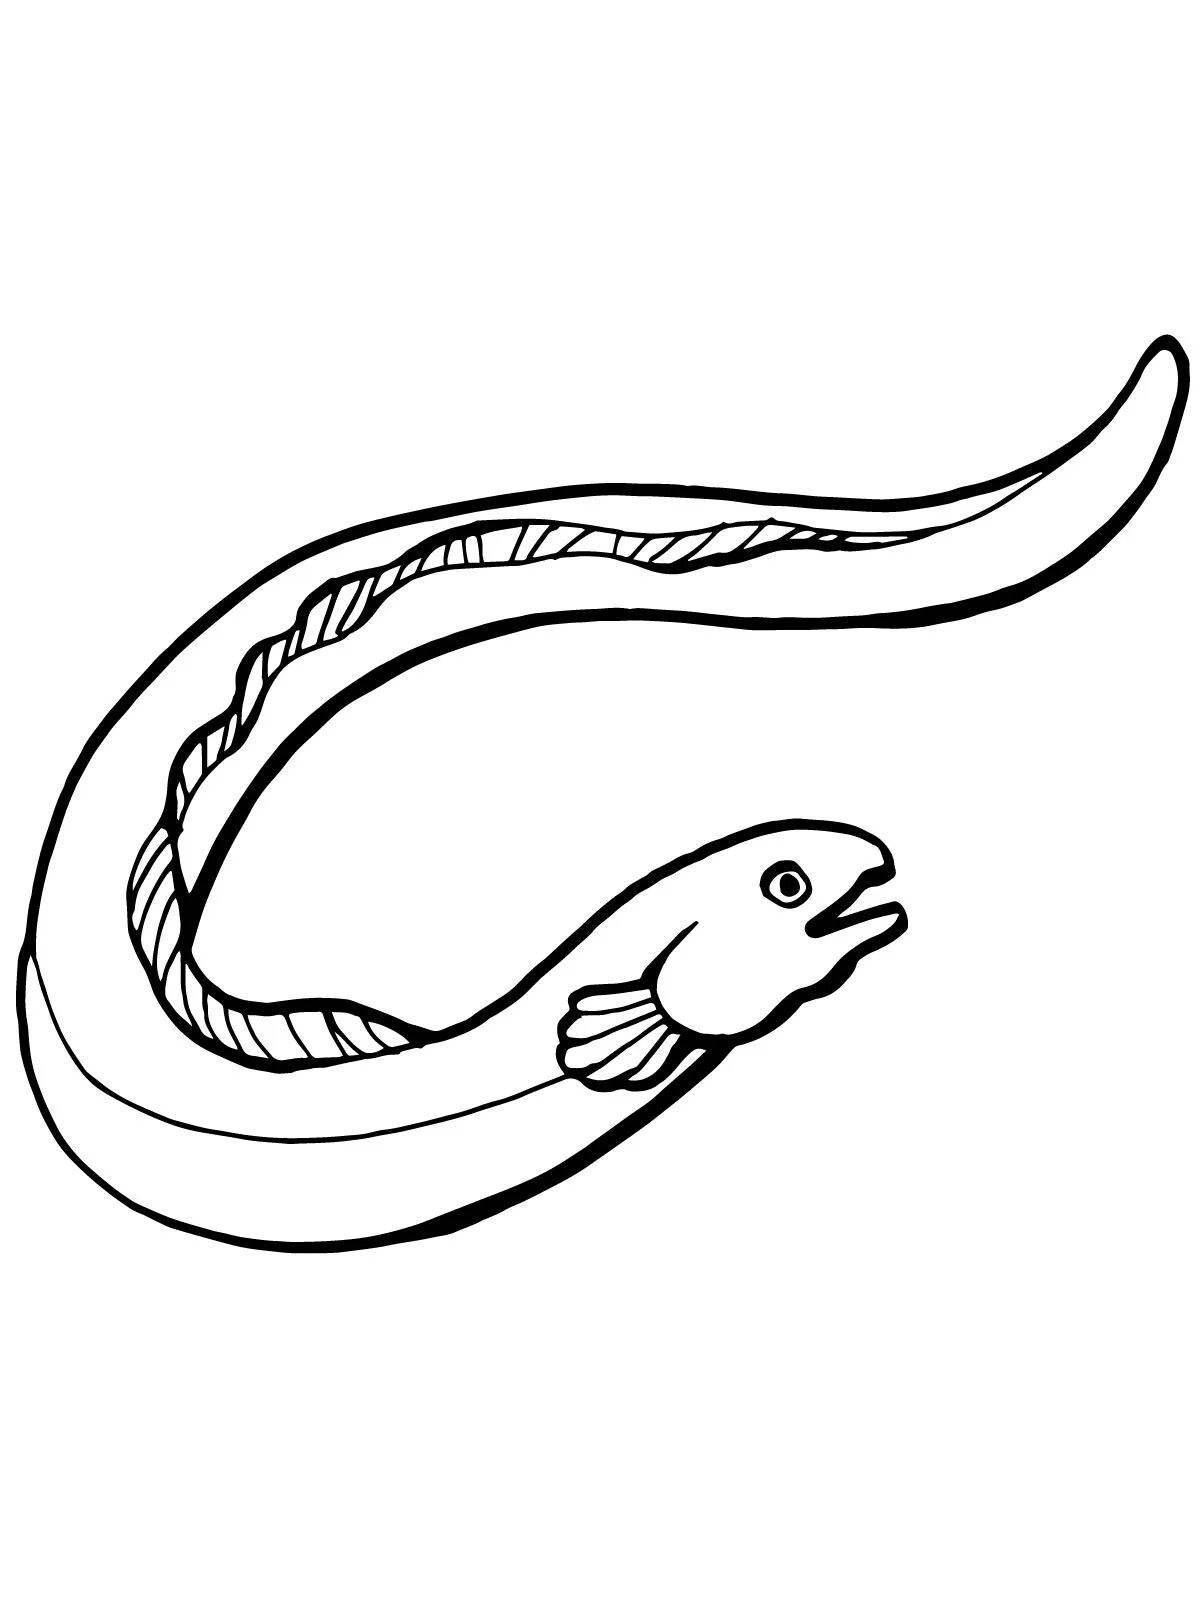 Coloring page beautiful moray eel